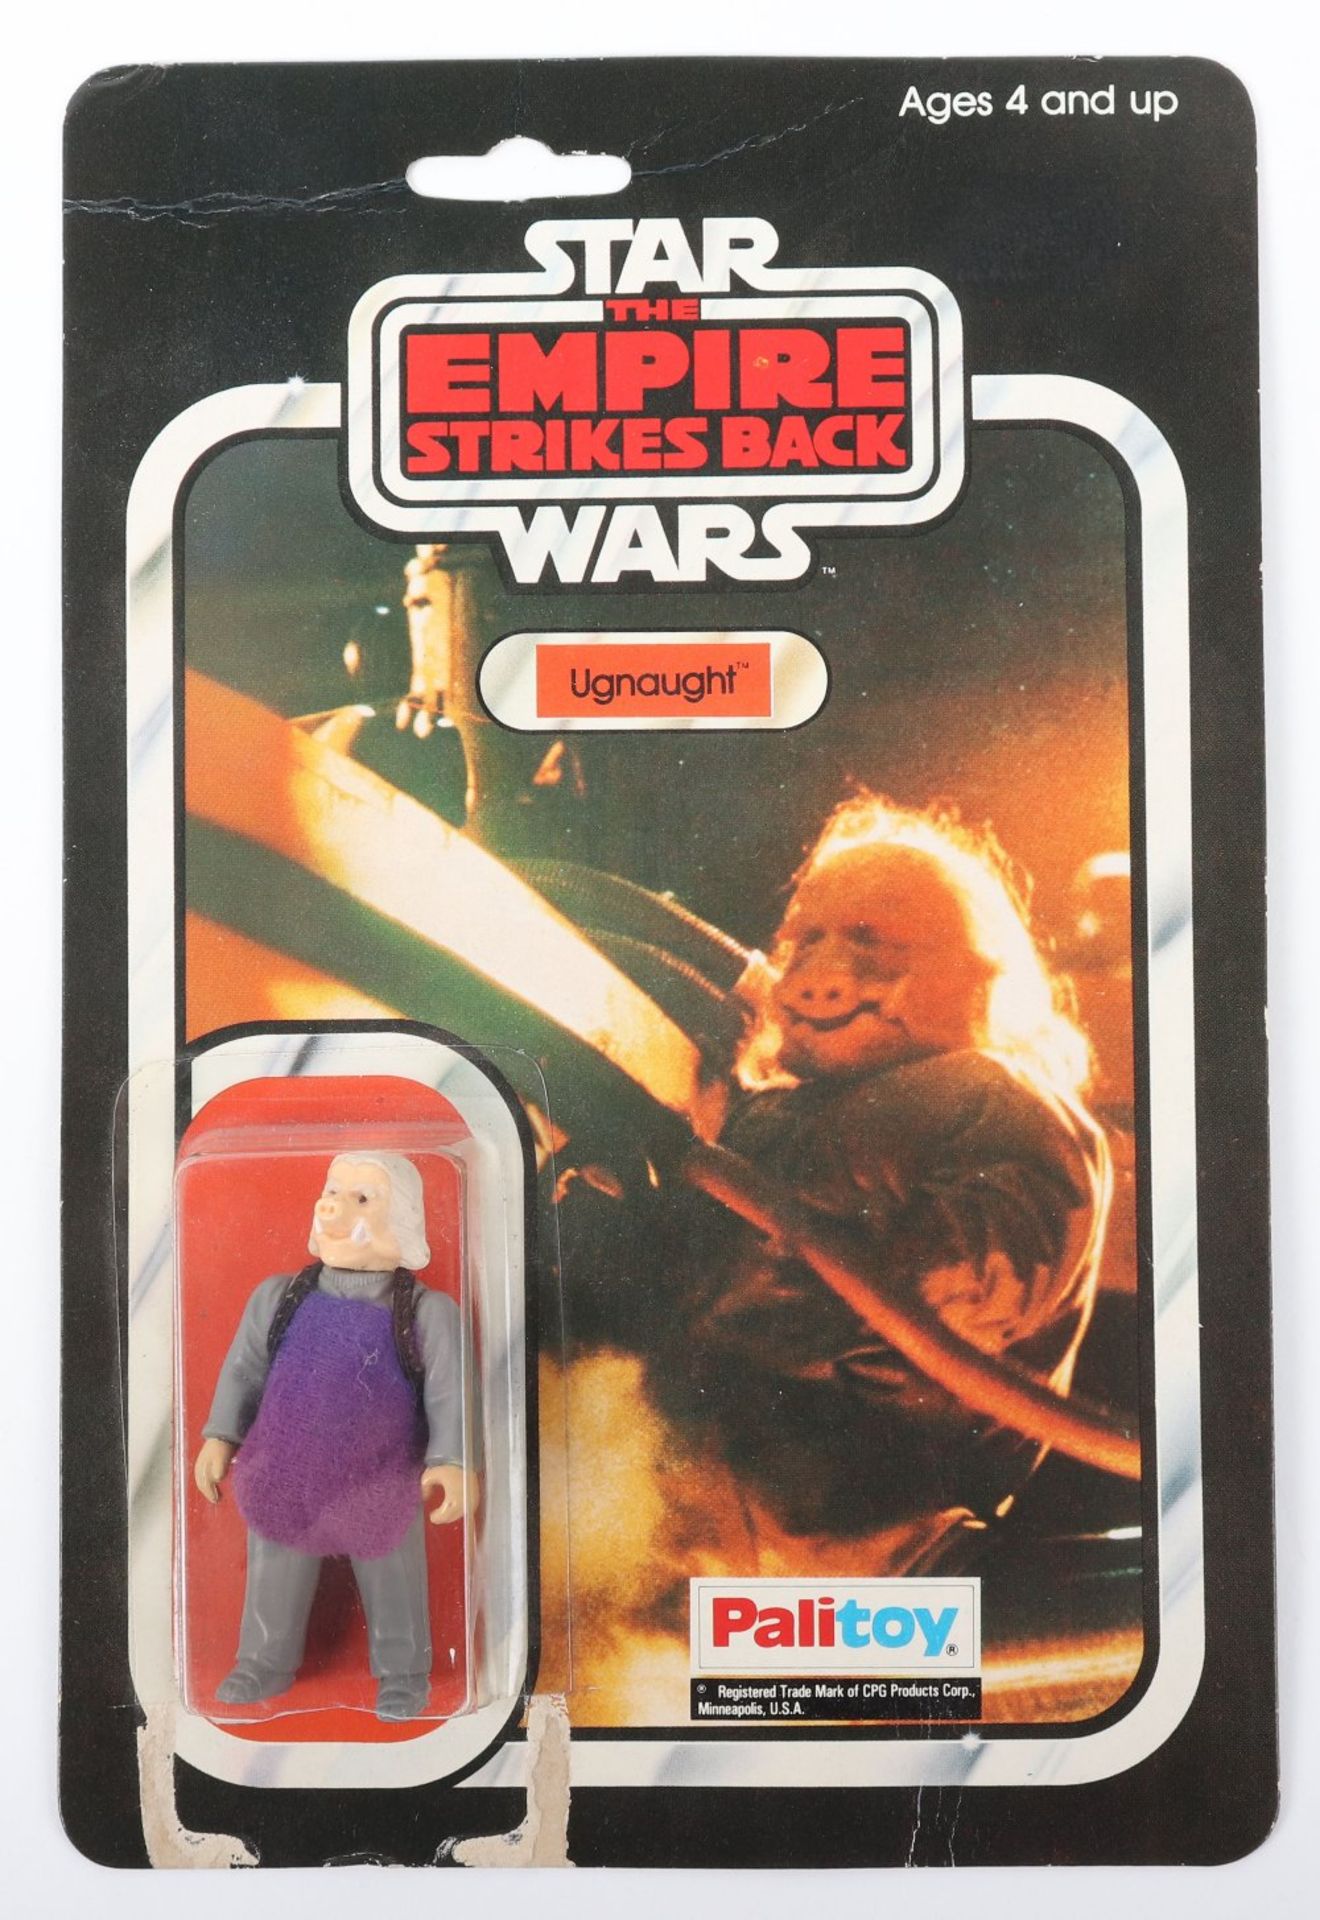 Palitoy Star Wars The Empire Strikes Back Ugnaught Vintage Original Carded Figure